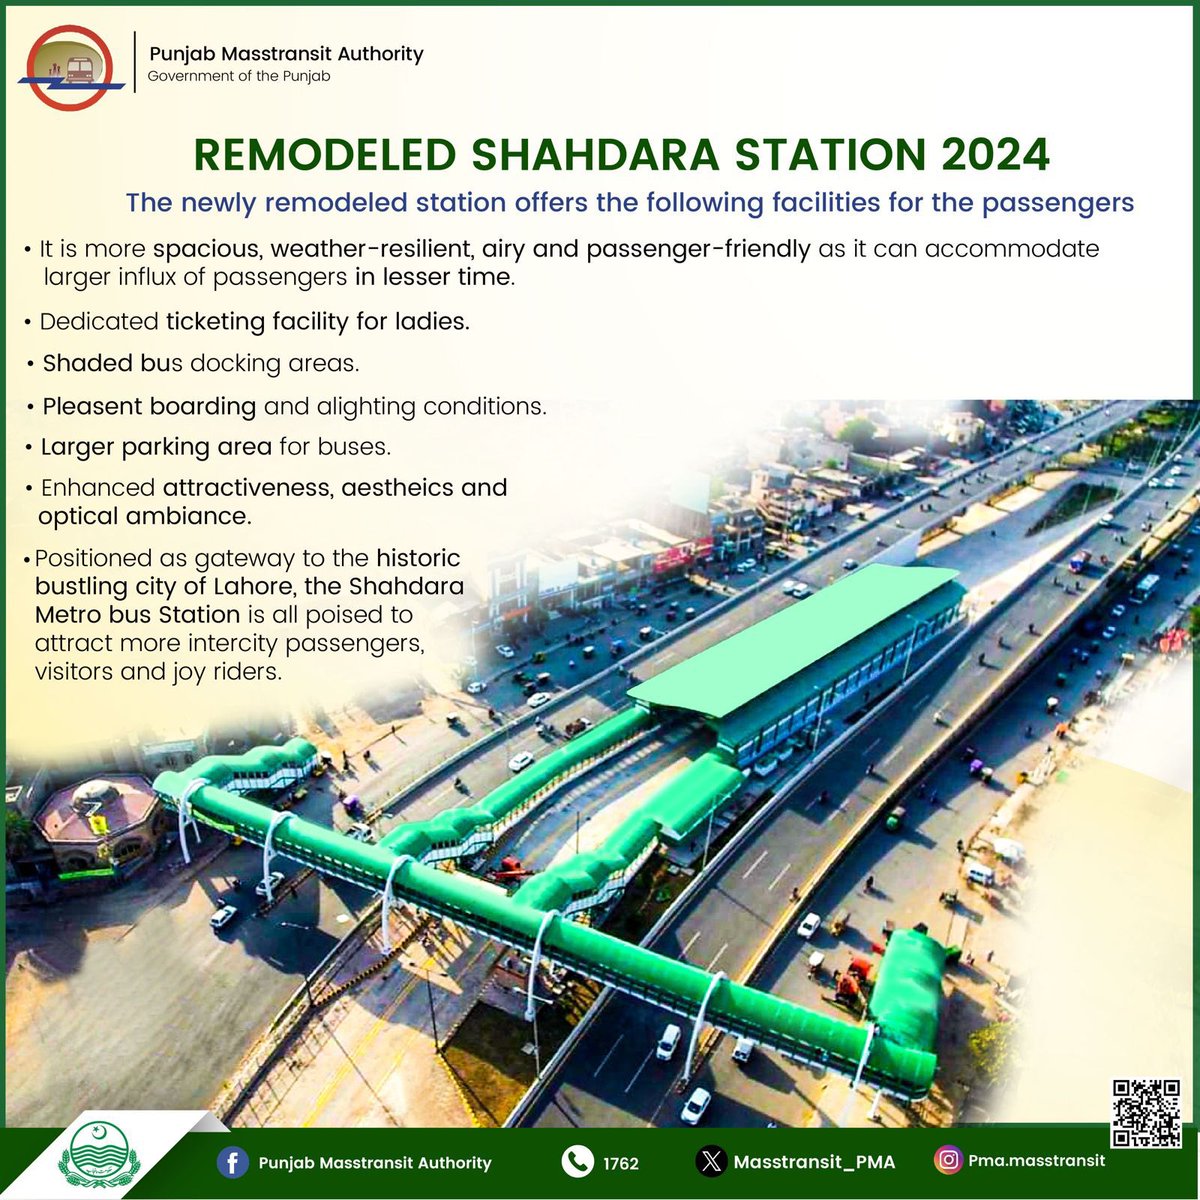 𝐑𝐄𝐌𝐎𝐃𝐄𝐋𝐄𝐃 𝐒𝐇𝐀𝐇𝐃𝐀𝐑𝐀 𝐒𝐓𝐀𝐓𝐈𝐎𝐍 𝟐𝟎𝟐𝟒  #punjabmasstransitauthority #PMA #Inauguration #Shahdara #Metrobus #Station #Lahore #CM #Publictransport